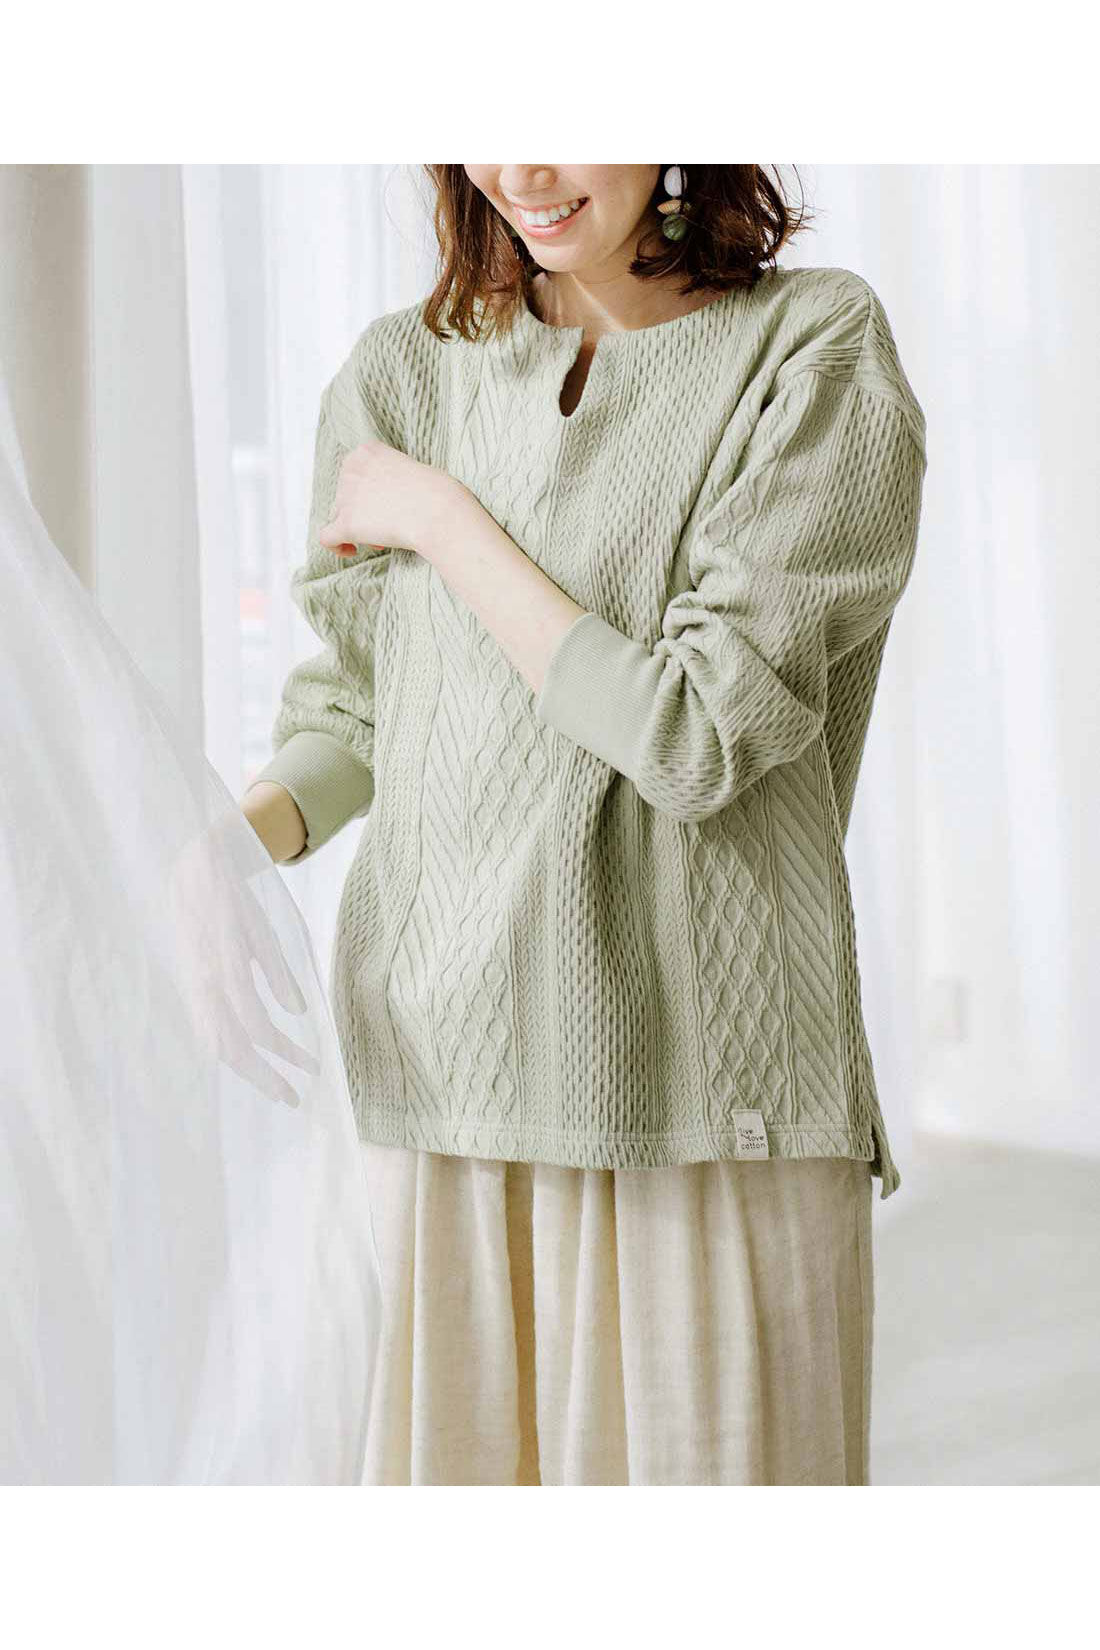 Live in  comfort|Live love cottonプロジェクト　リブ イン コンフォート　編み柄が素敵な袖口リブオーガニックコットントップス〈ピンク〉|※着用イメージです。お届けするカラーとは異なります。